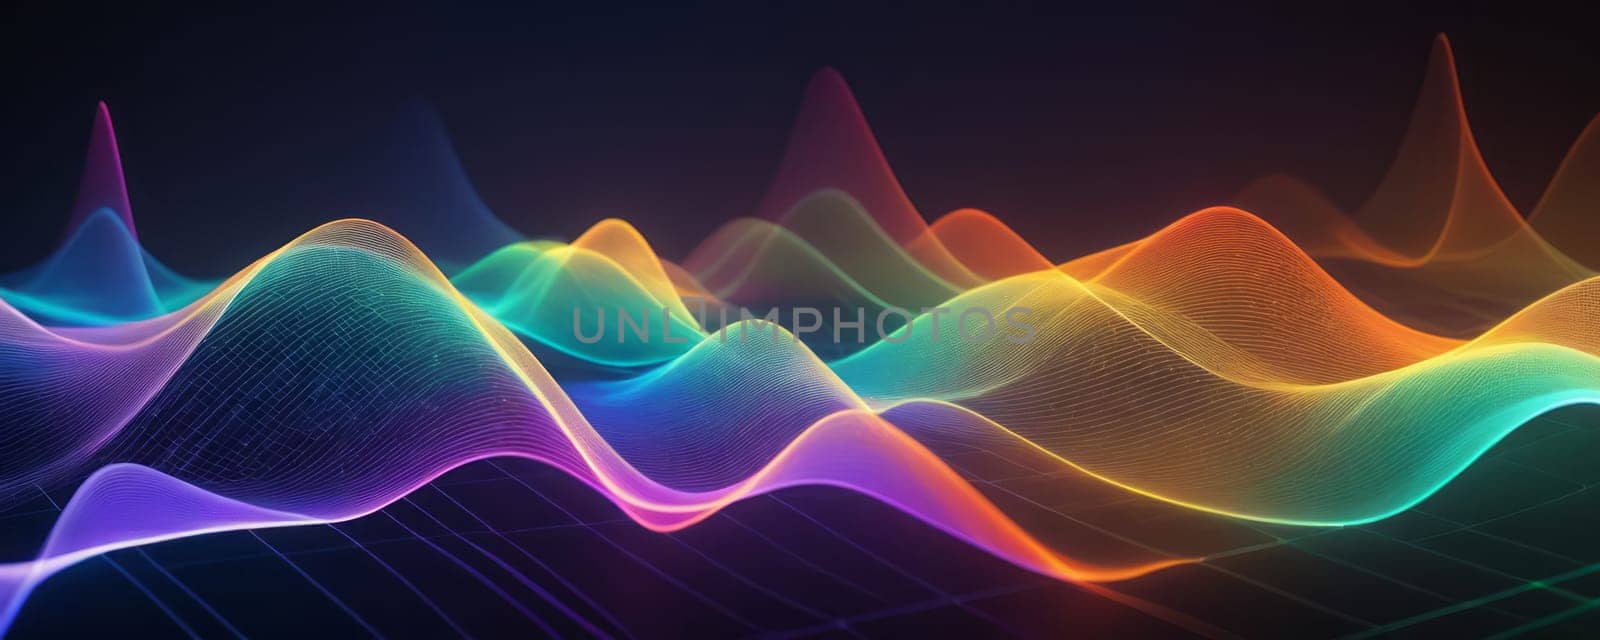 Dynamic Digital Waveform in Vibrant Colors by nkotlyar